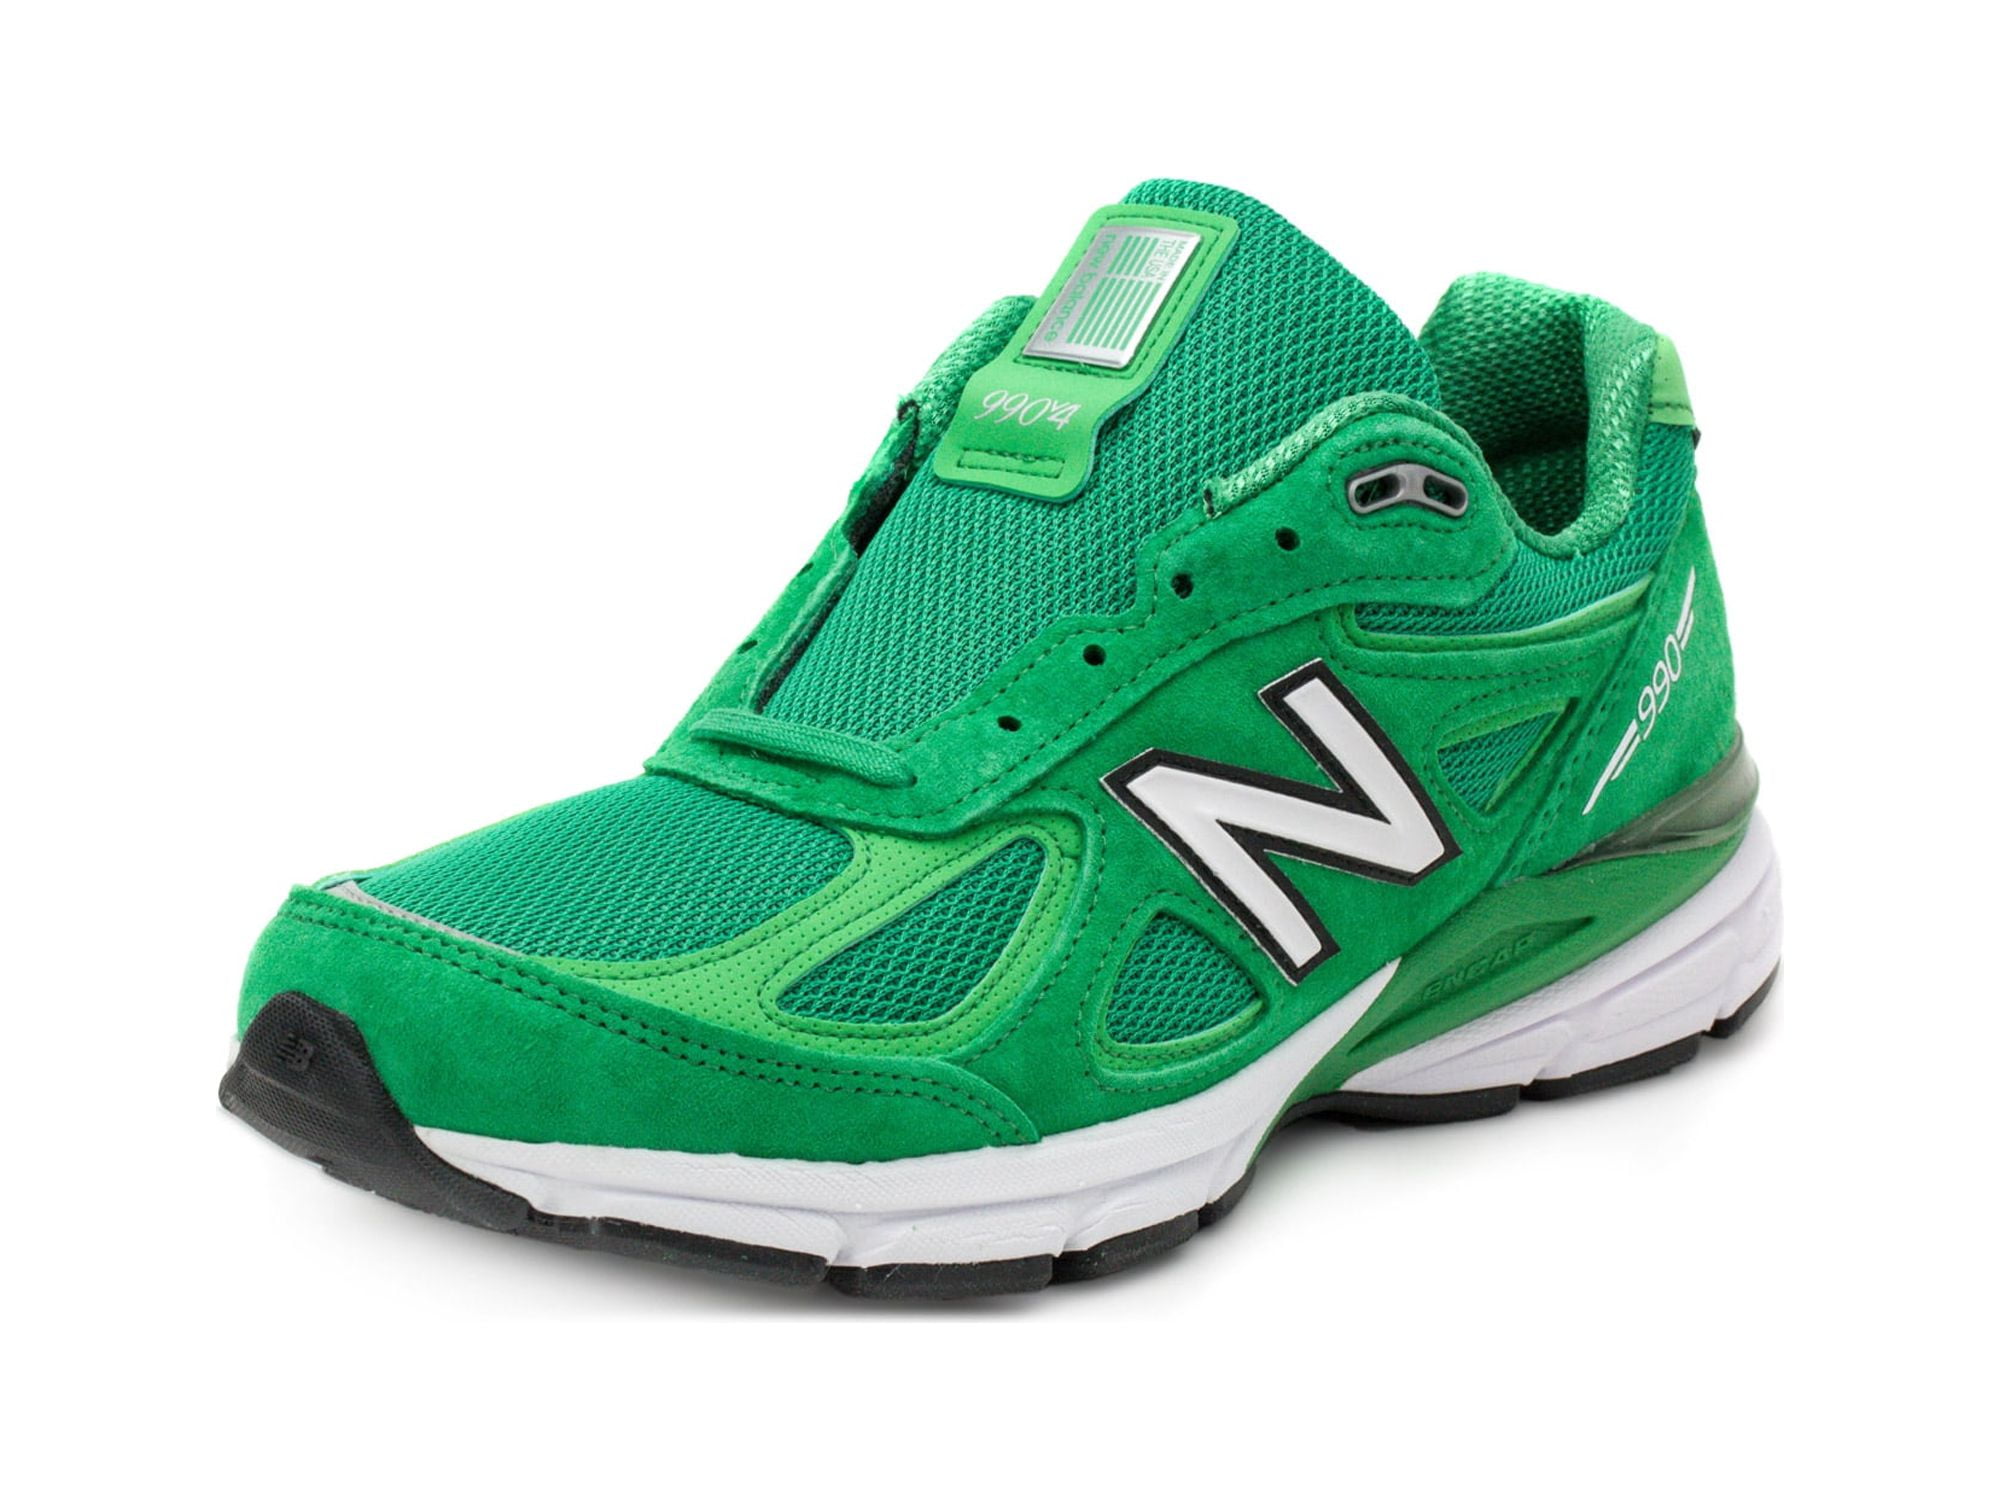 New Balance Men's 990v4 Made in US Shoes Green - Walmart.com